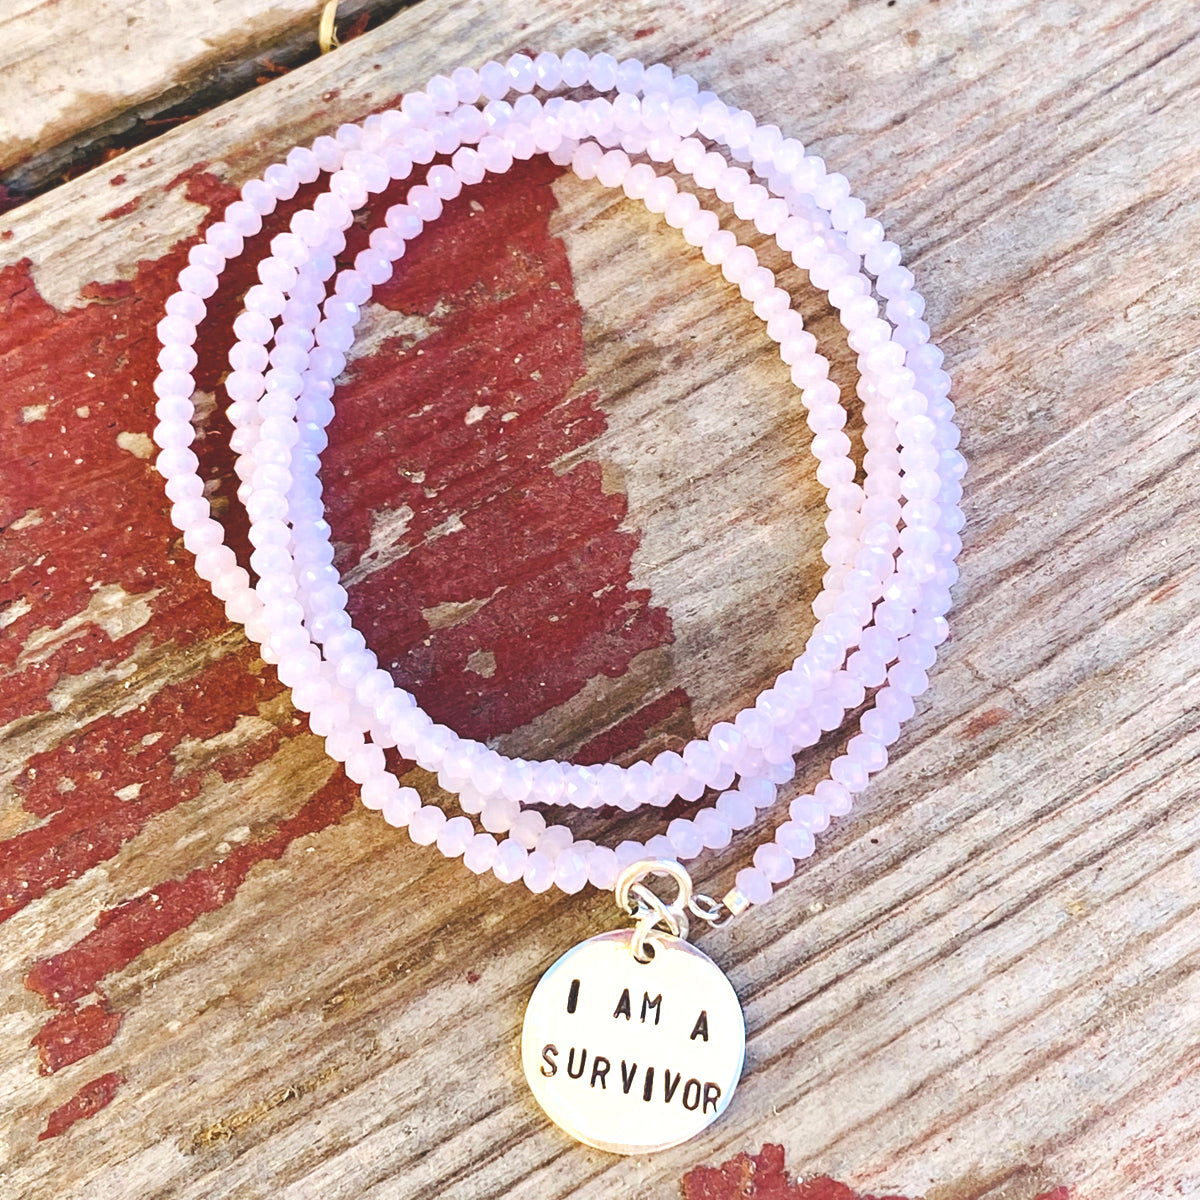 I am a Survivor- Affirmation Bracelet with Rose Quartz. I am a survivor, not a victim. 